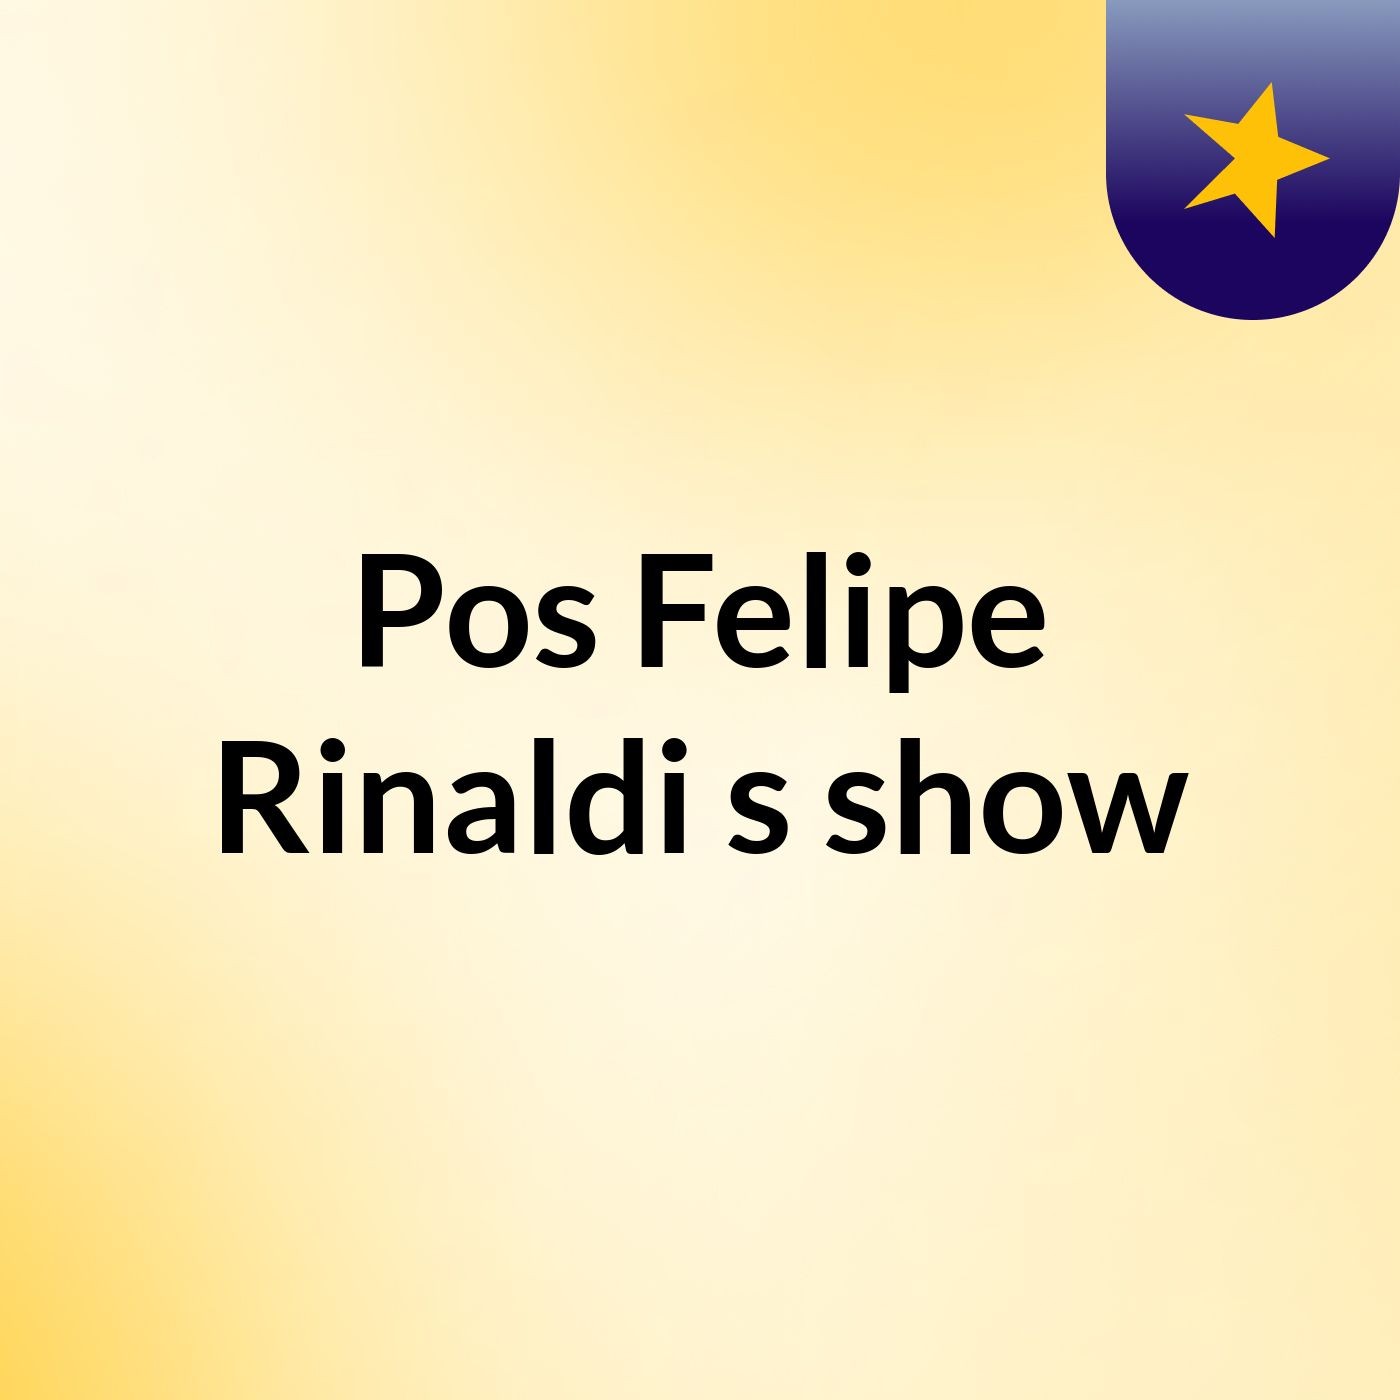 Pos Felipe Rinaldi's show